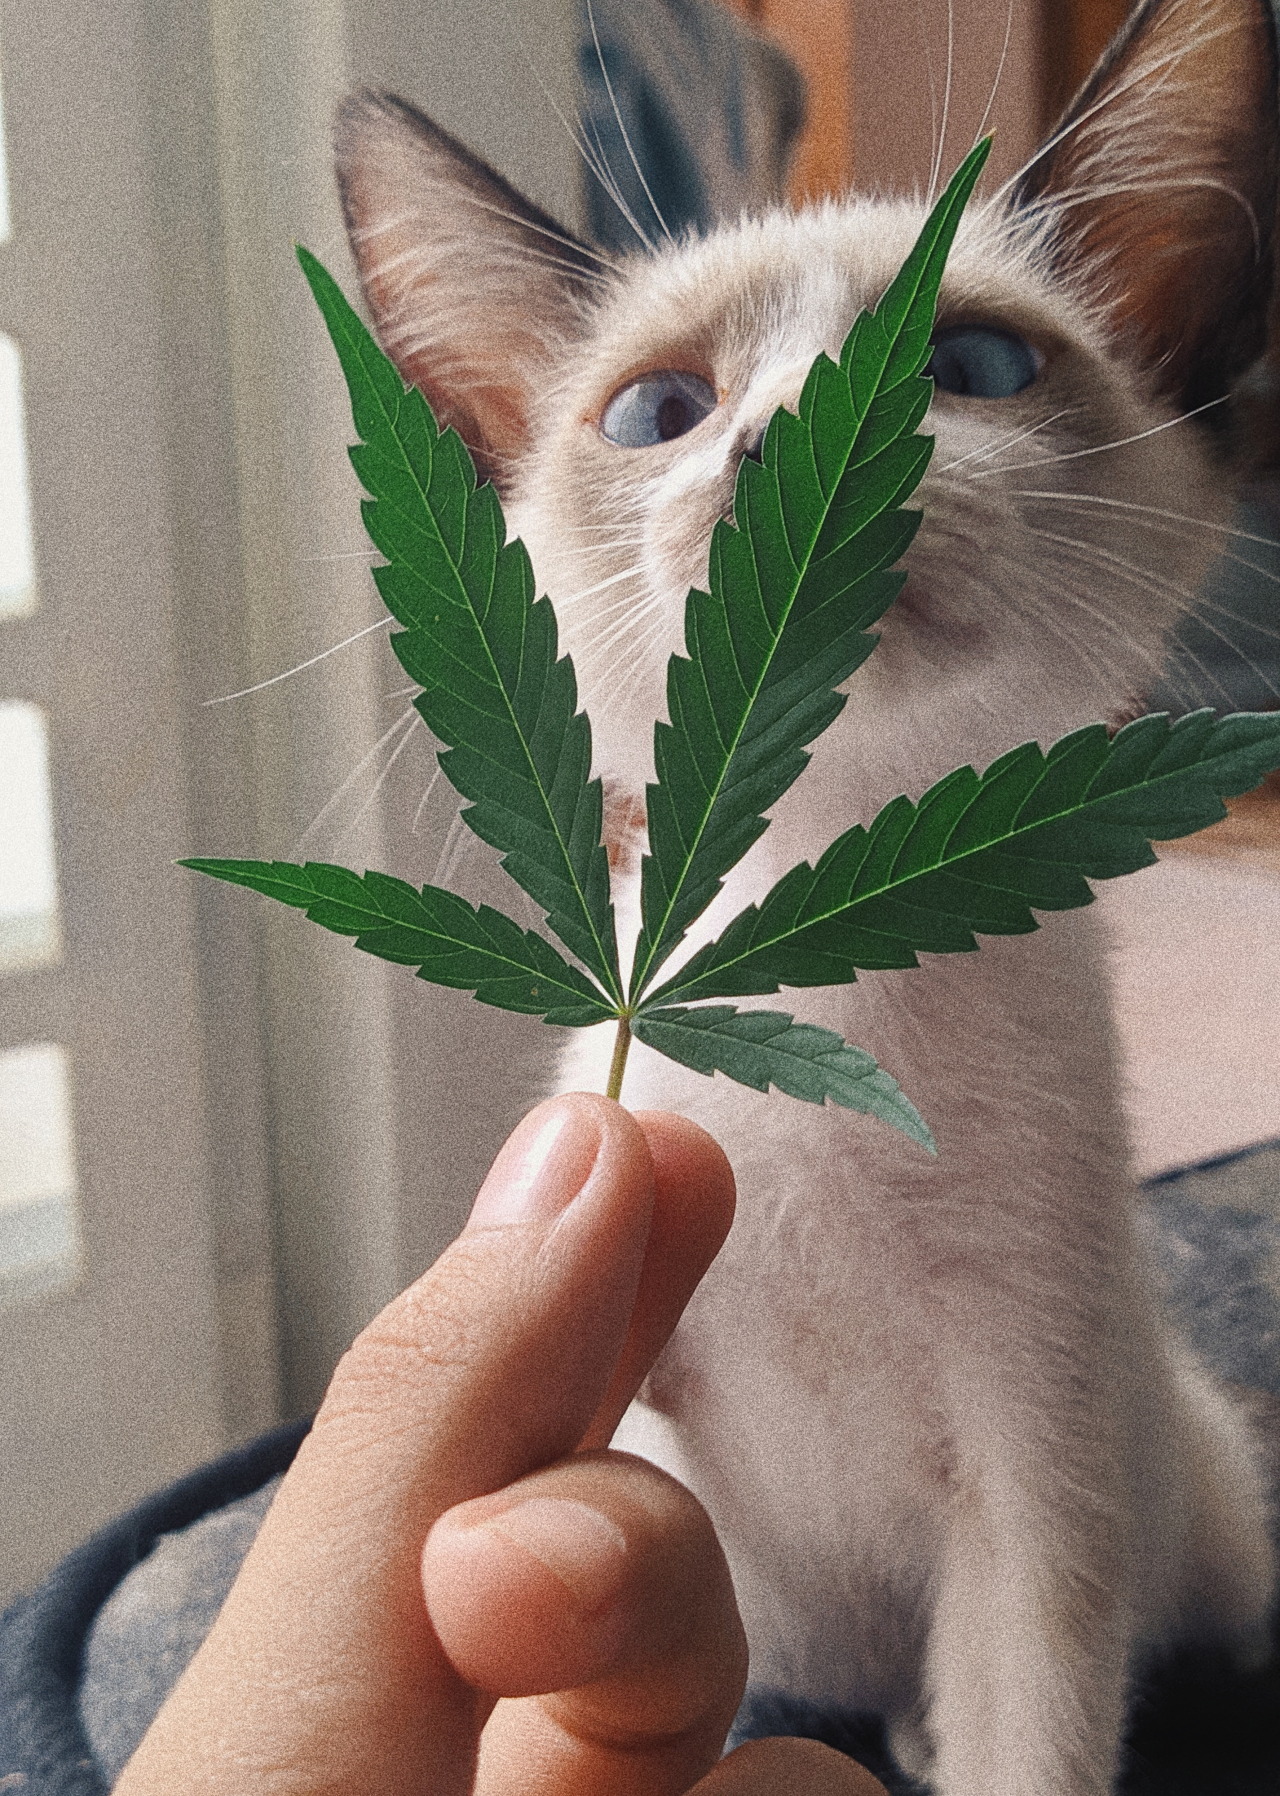 Cats Smoking Weed Tumblr